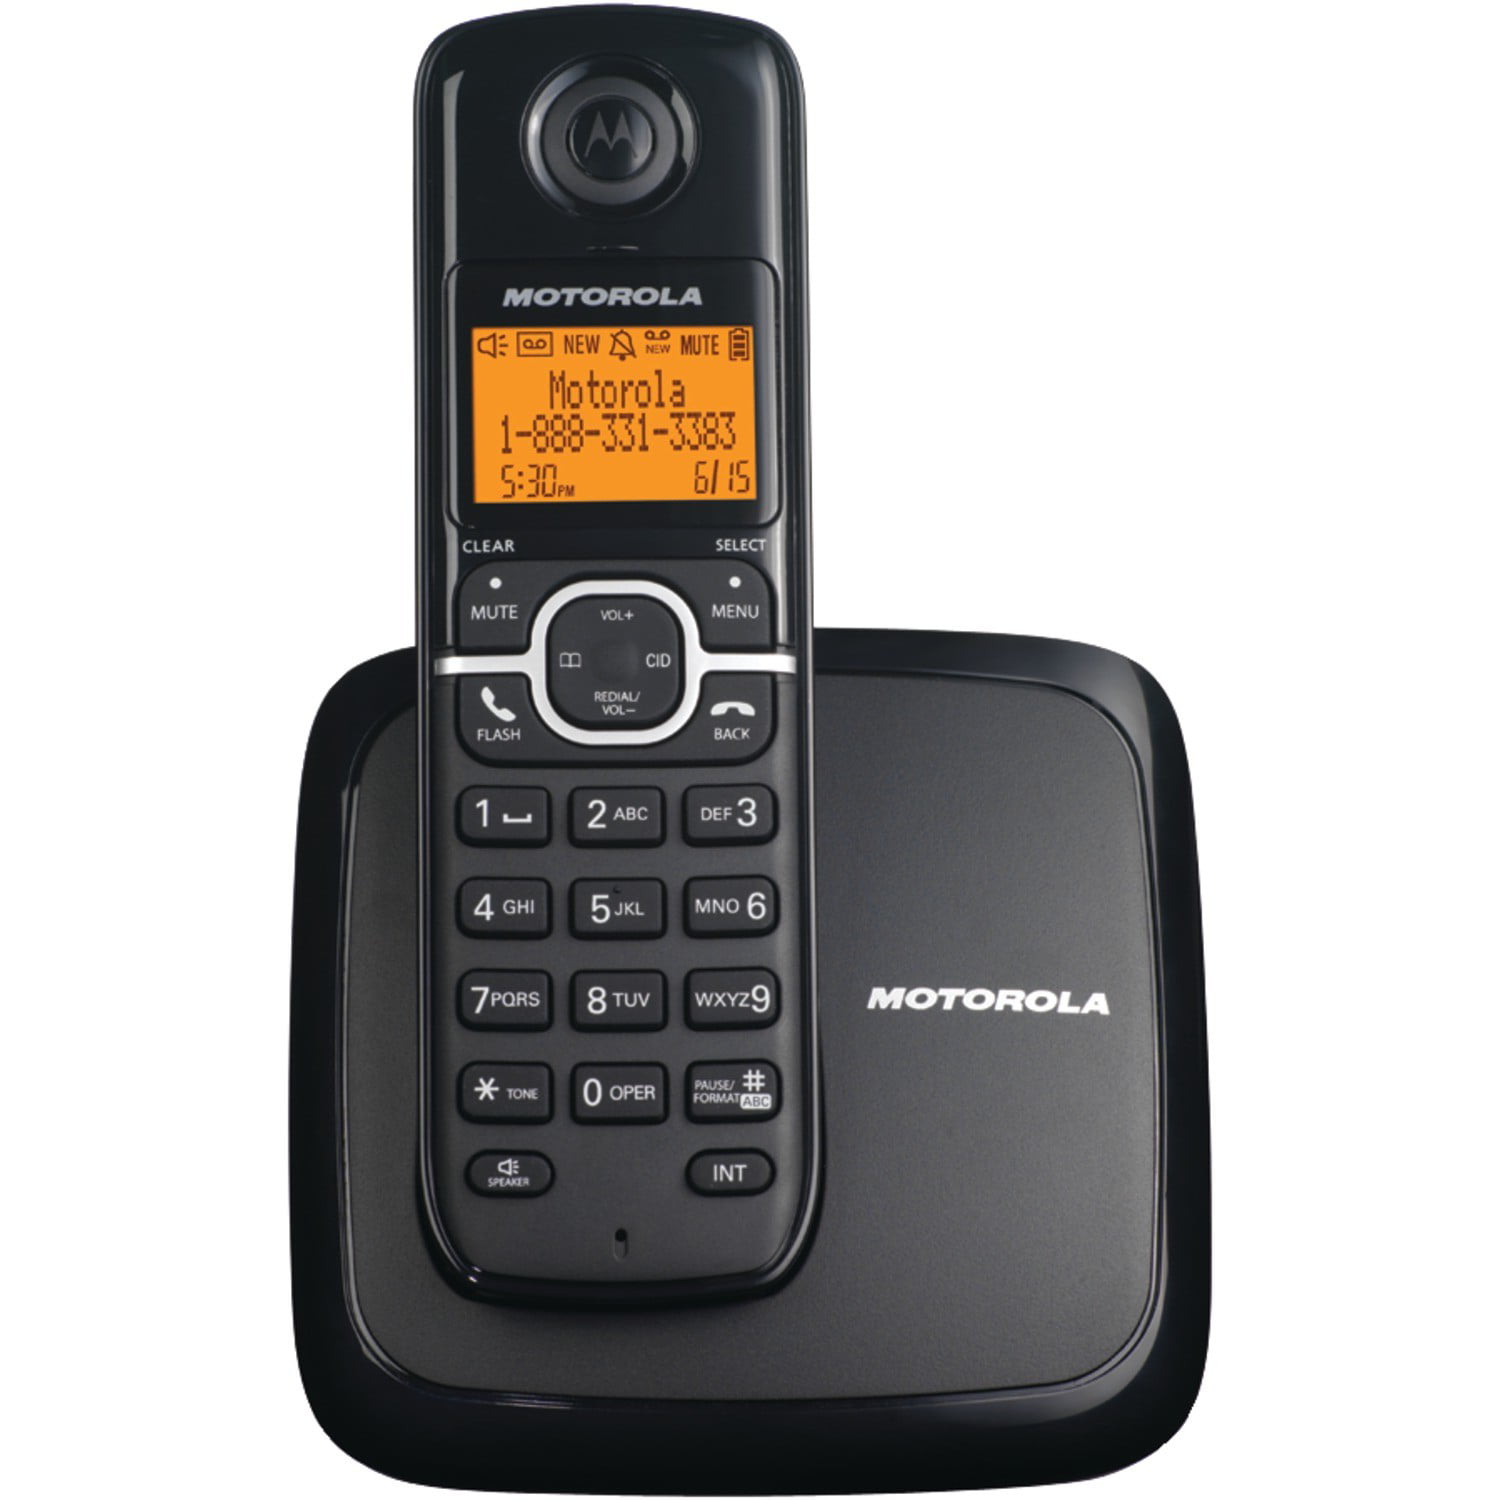 Motorola L703m 1.9 GHz Trio Handsets Single Line Cordless Phone for sale  online